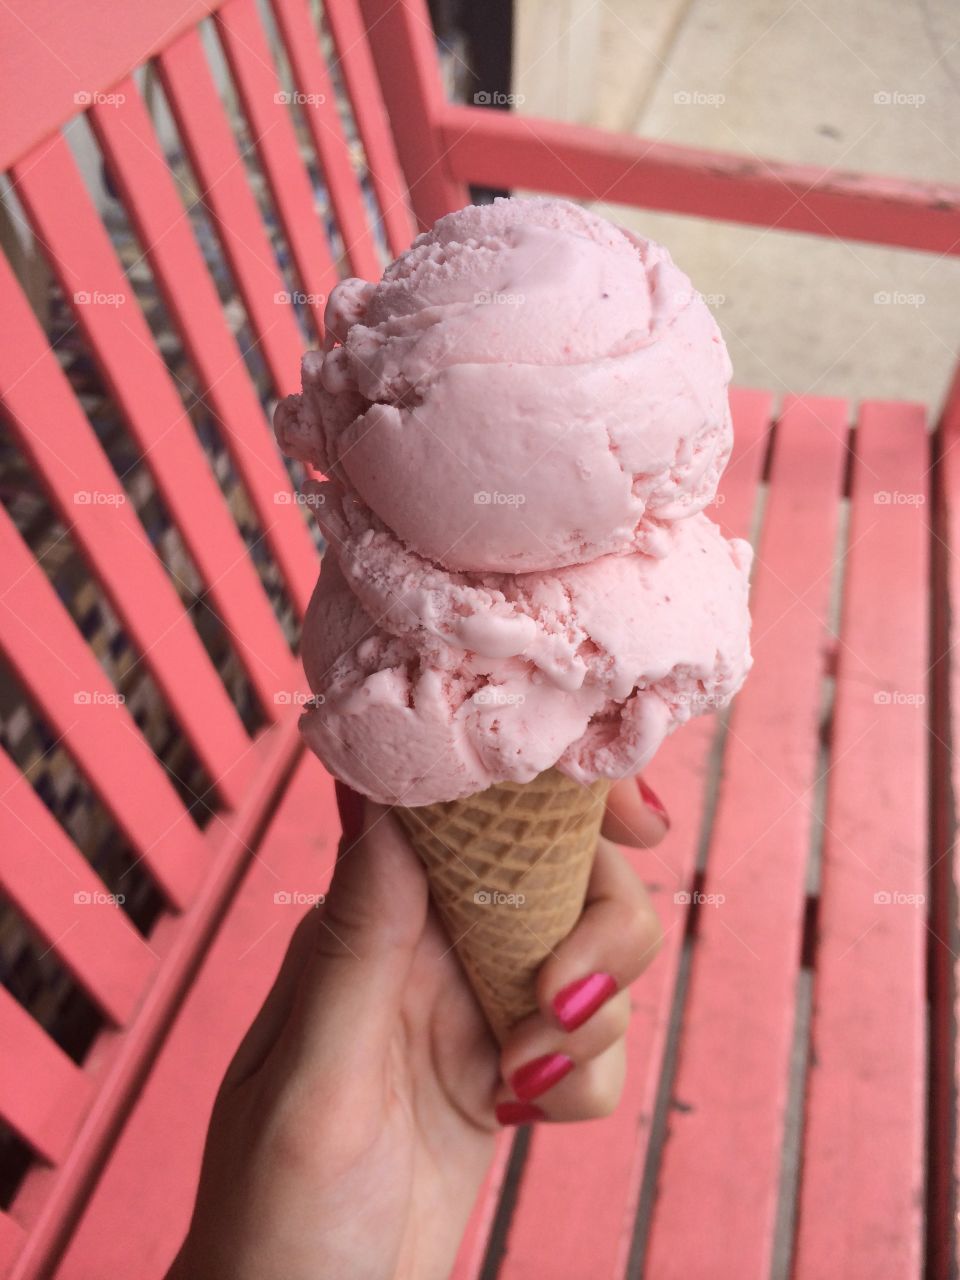 Pretty in Pink 3. Taken at Bobtail Ice Cream in Chicago 